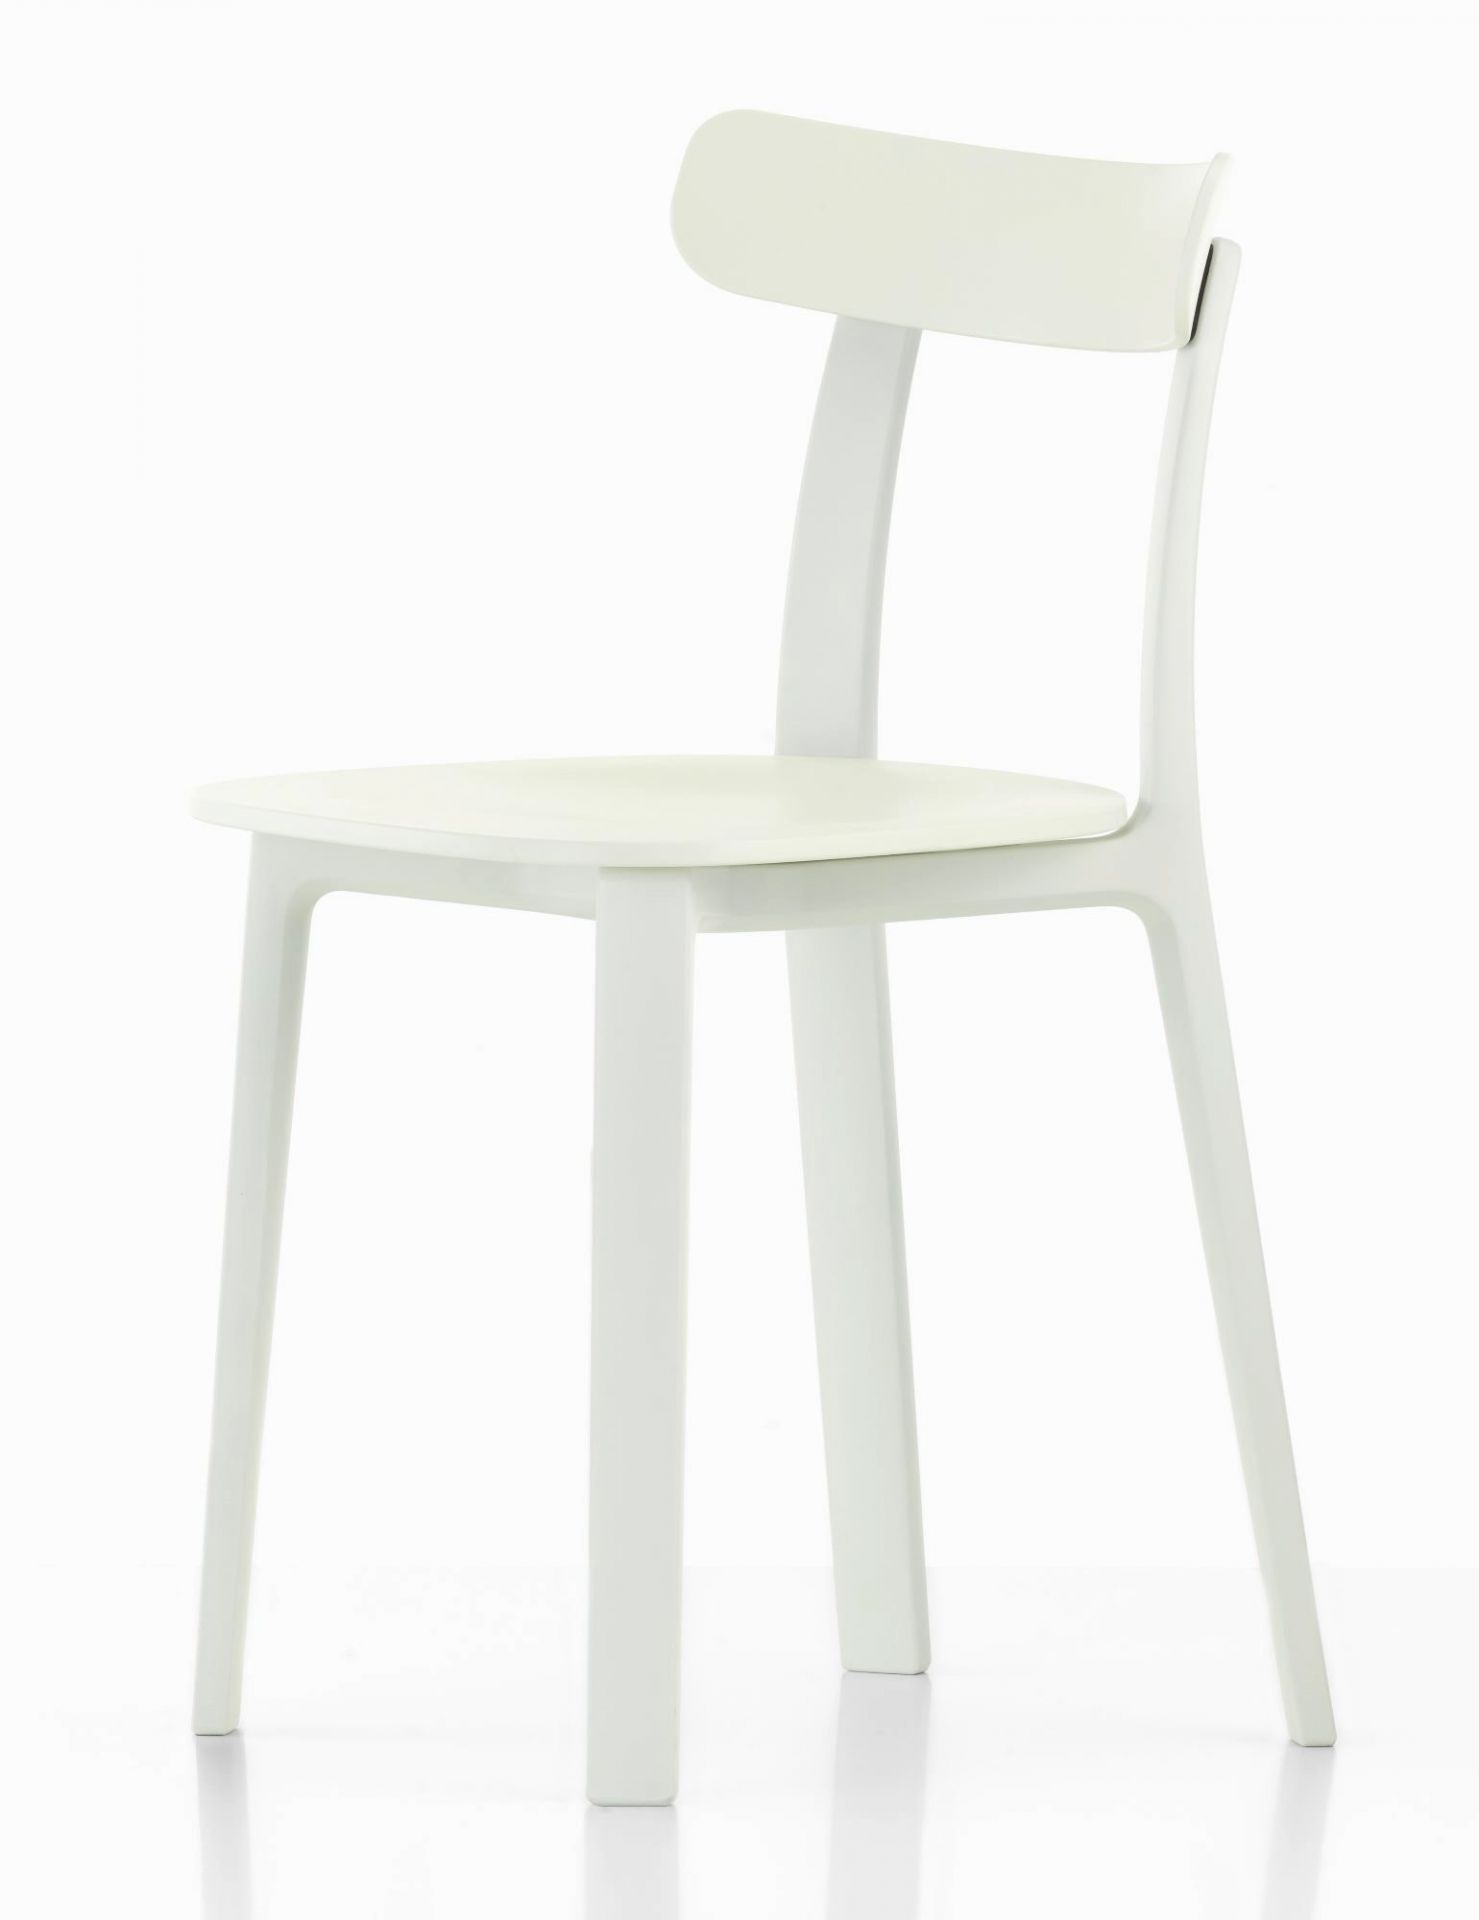 All Plastic Chair Outdoor Stuhl Vitra-Weiß